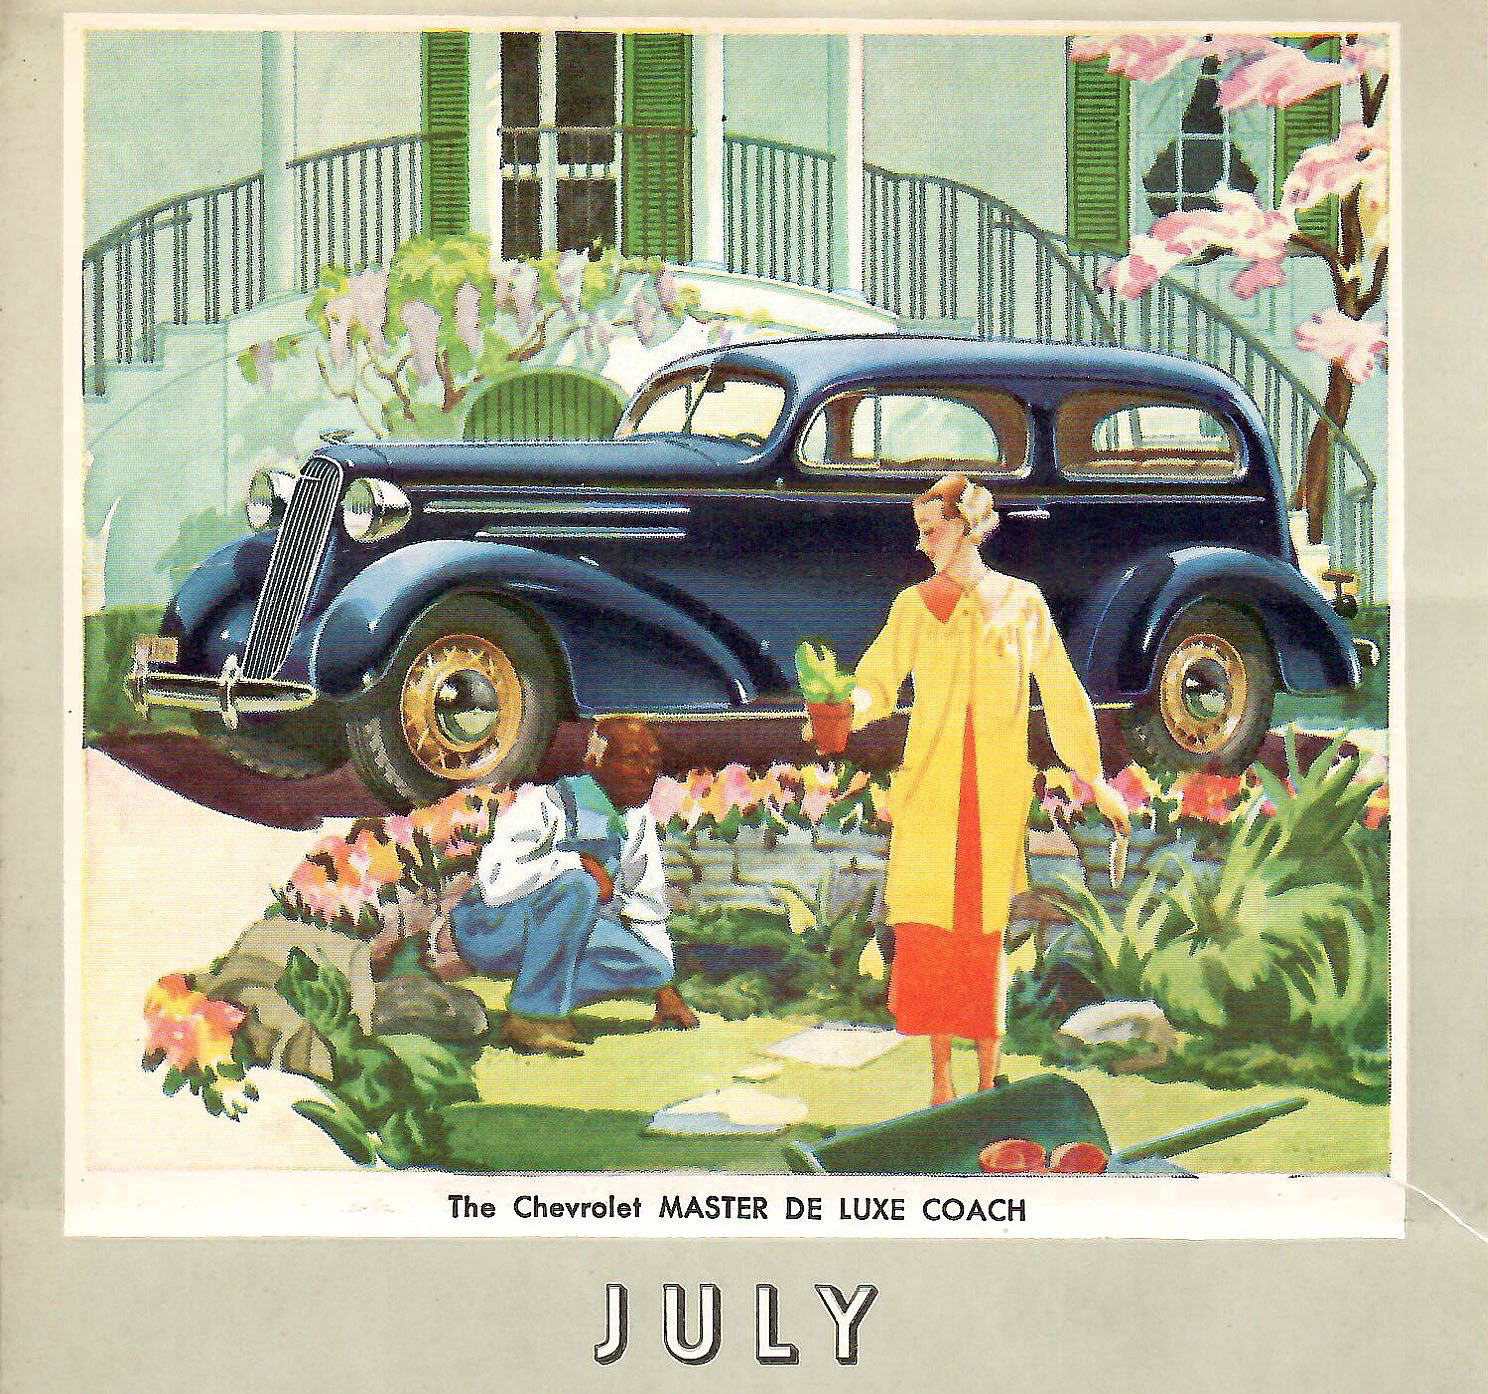 Travel Through the Seasons Via this Vintage Car Calendar Glorious